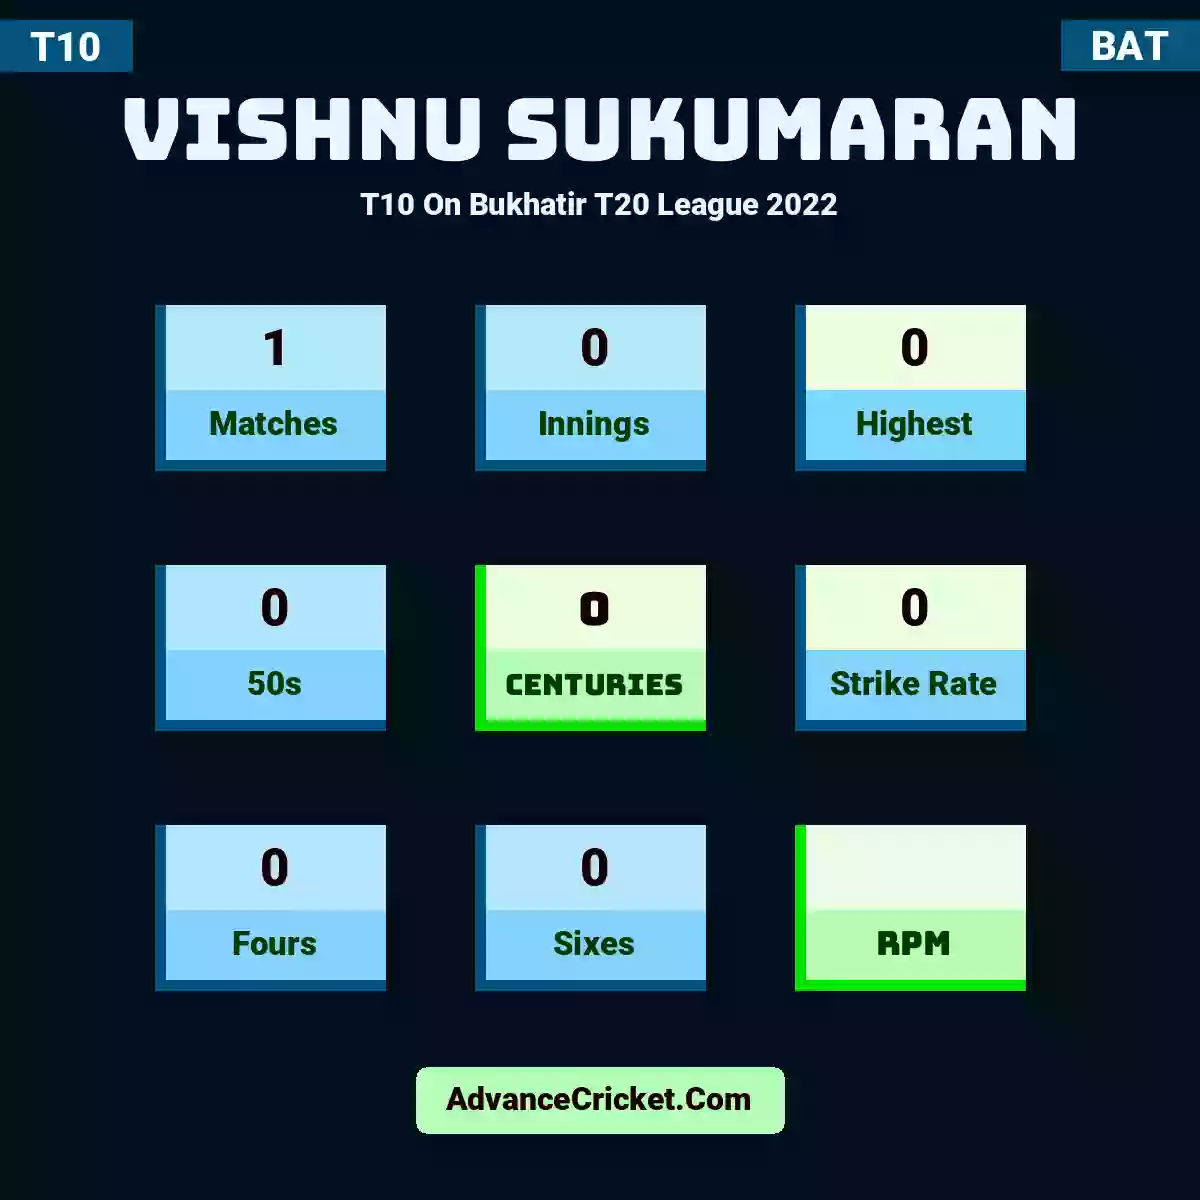 Vishnu Sukumaran T10  On Bukhatir T20 League 2022, Vishnu Sukumaran played 1 matches, scored 0 runs as highest, 0 half-centuries, and 0 centuries, with a strike rate of 0. V.Sukumaran hit 0 fours and 0 sixes.